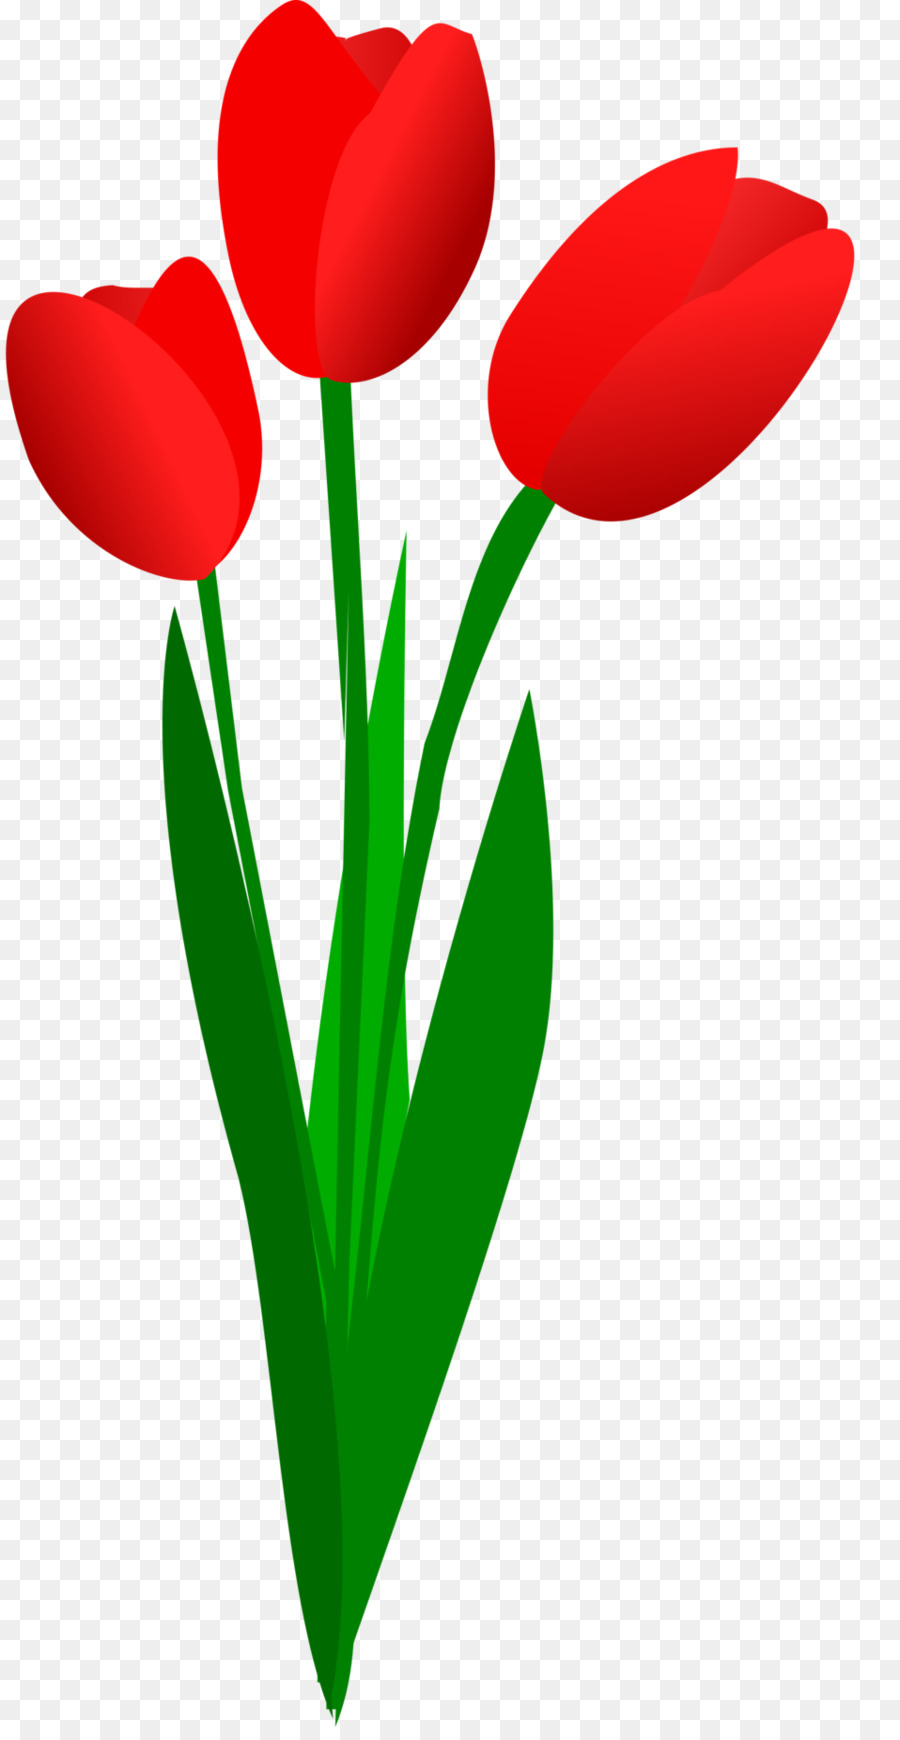 Tulip Free content Flower Clip art - Cliparts Tulip Bouquet png download - 958*1838 - Free Transparent Tulip png Download.